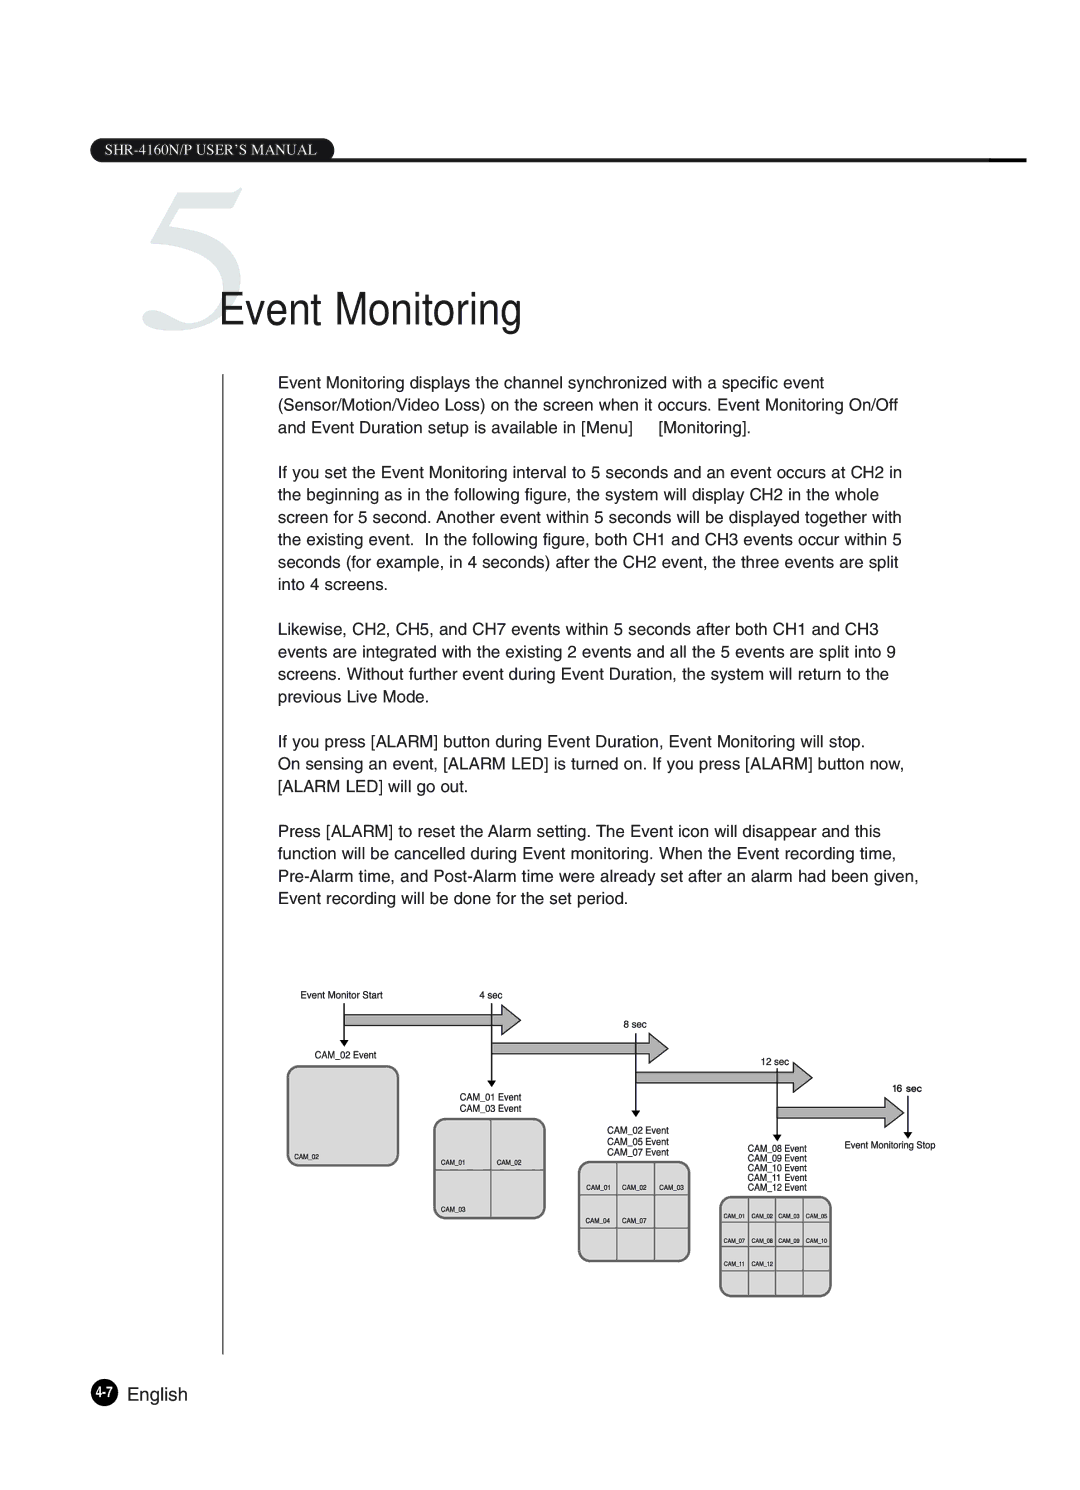 Samsung SHR-4160P manual 5Event Monitoring, 7English 